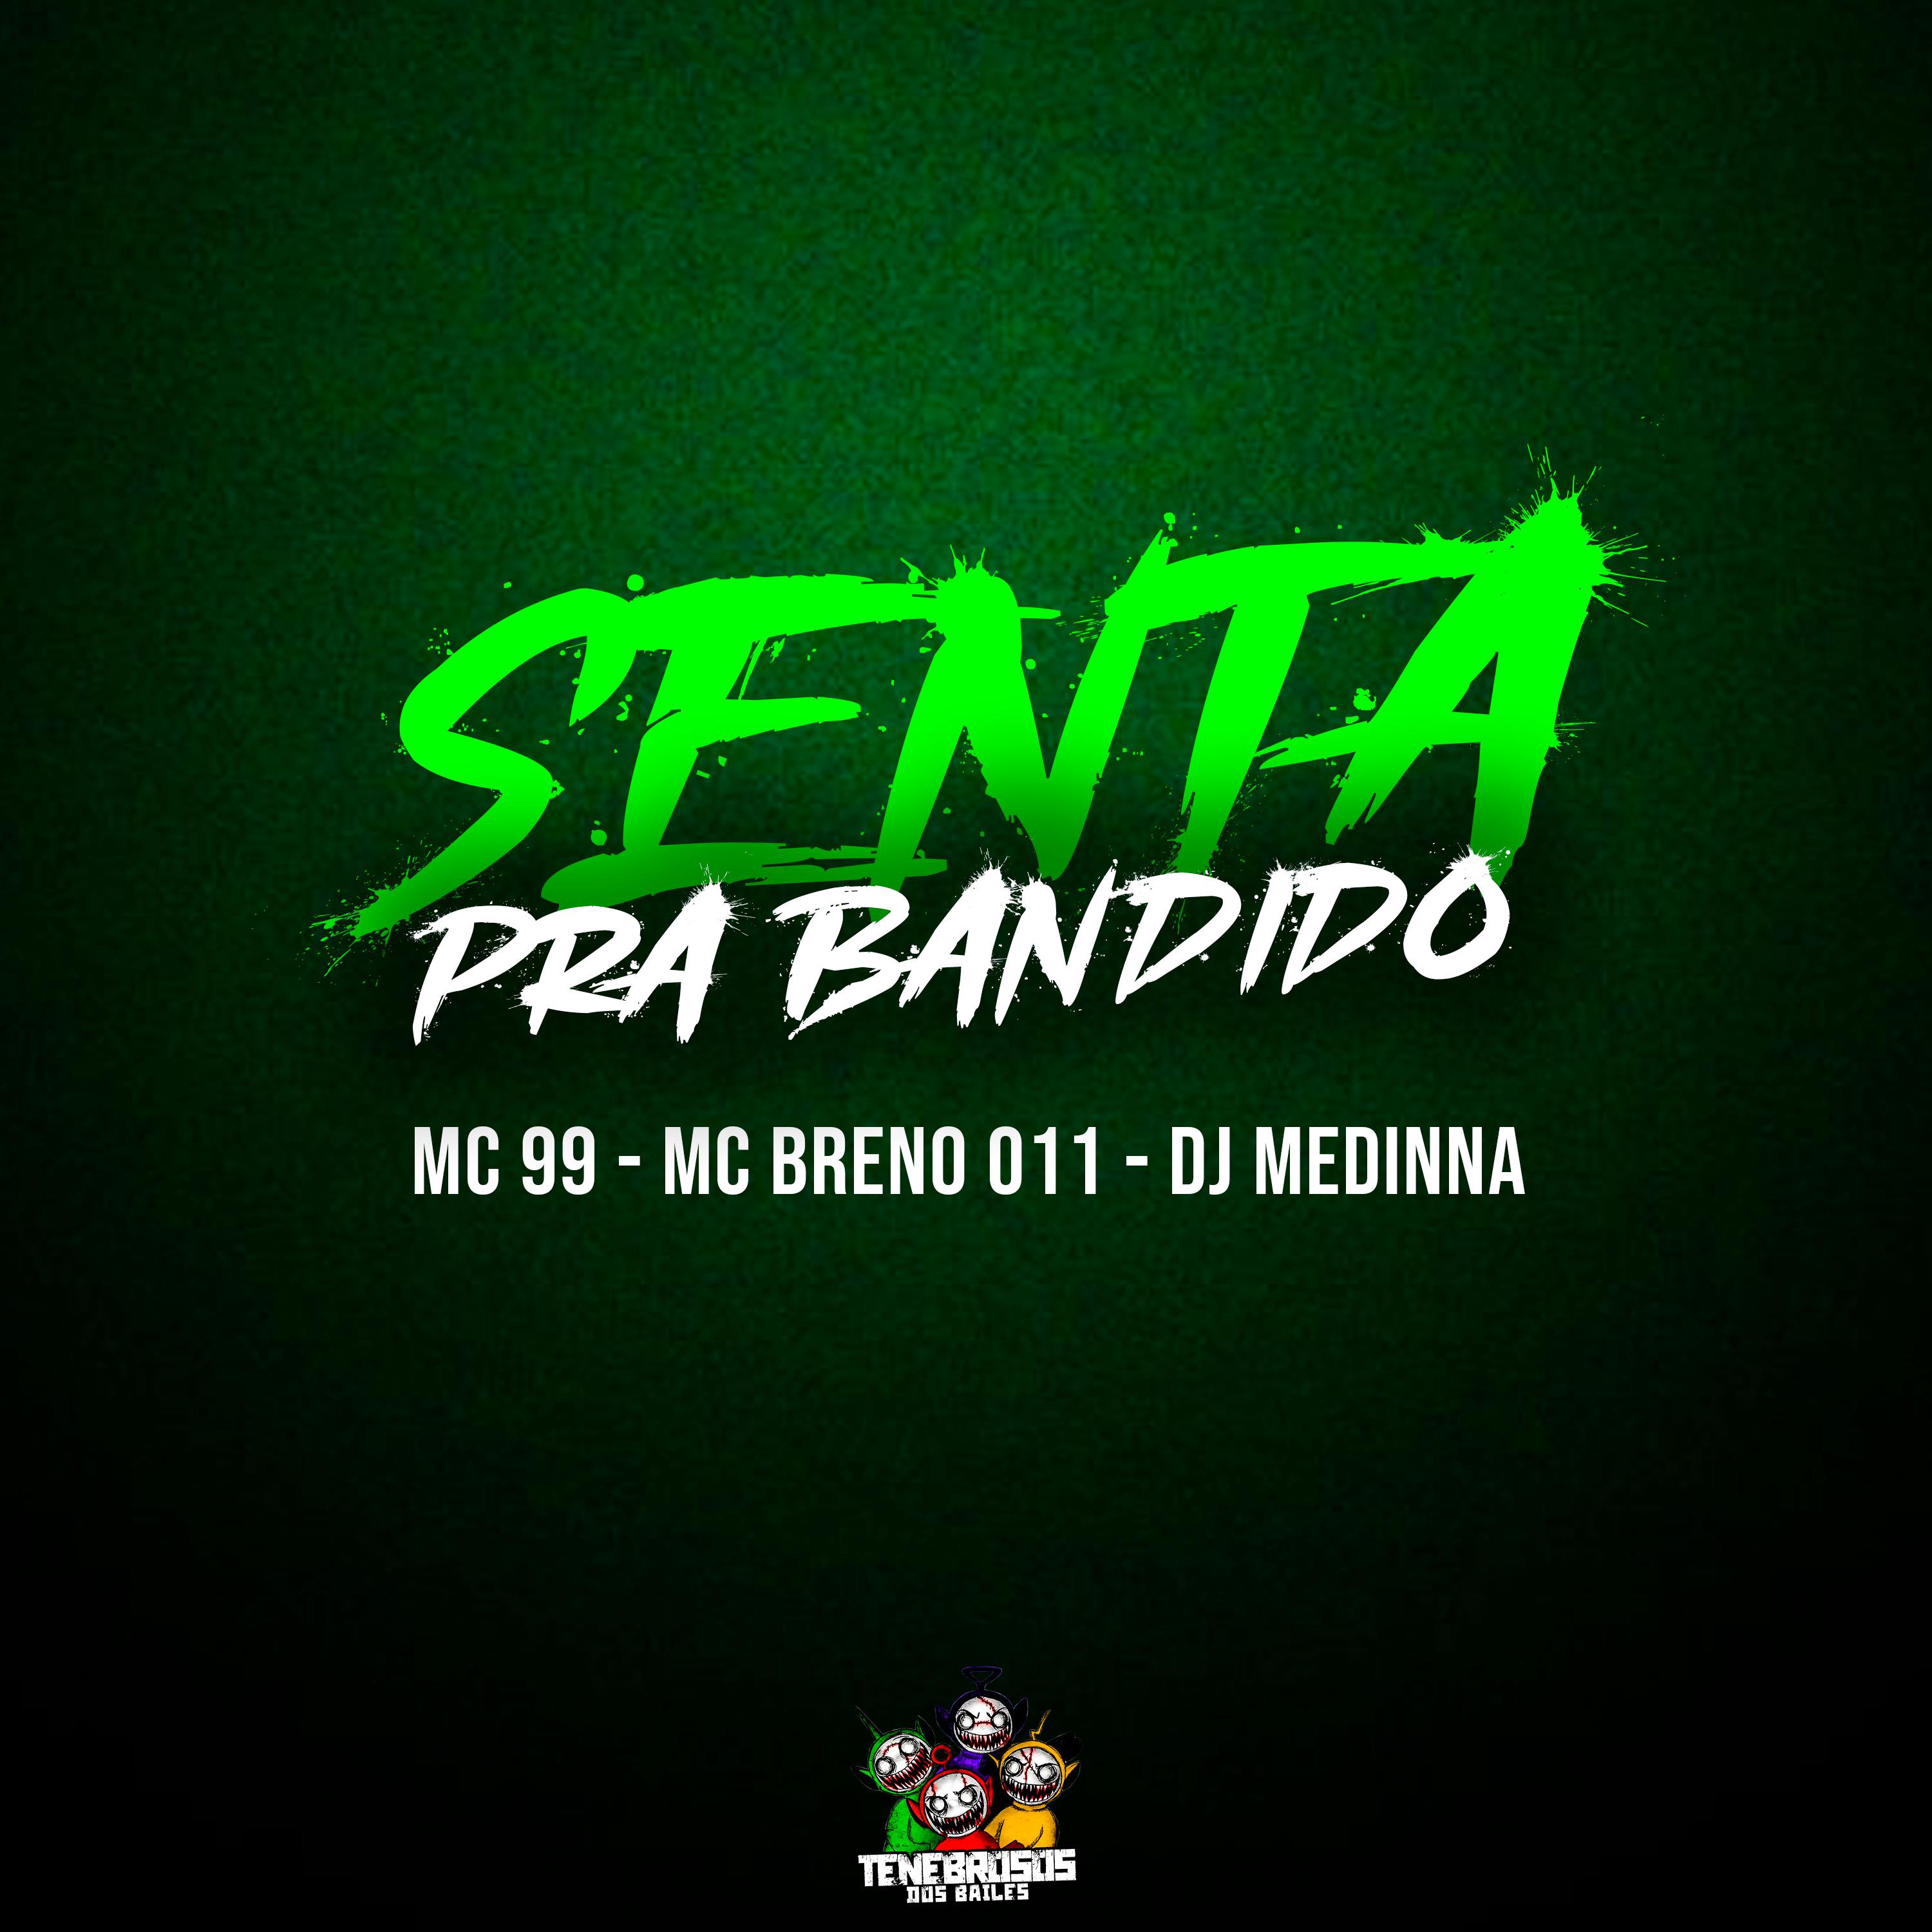 Постер альбома Senta pra Bandido